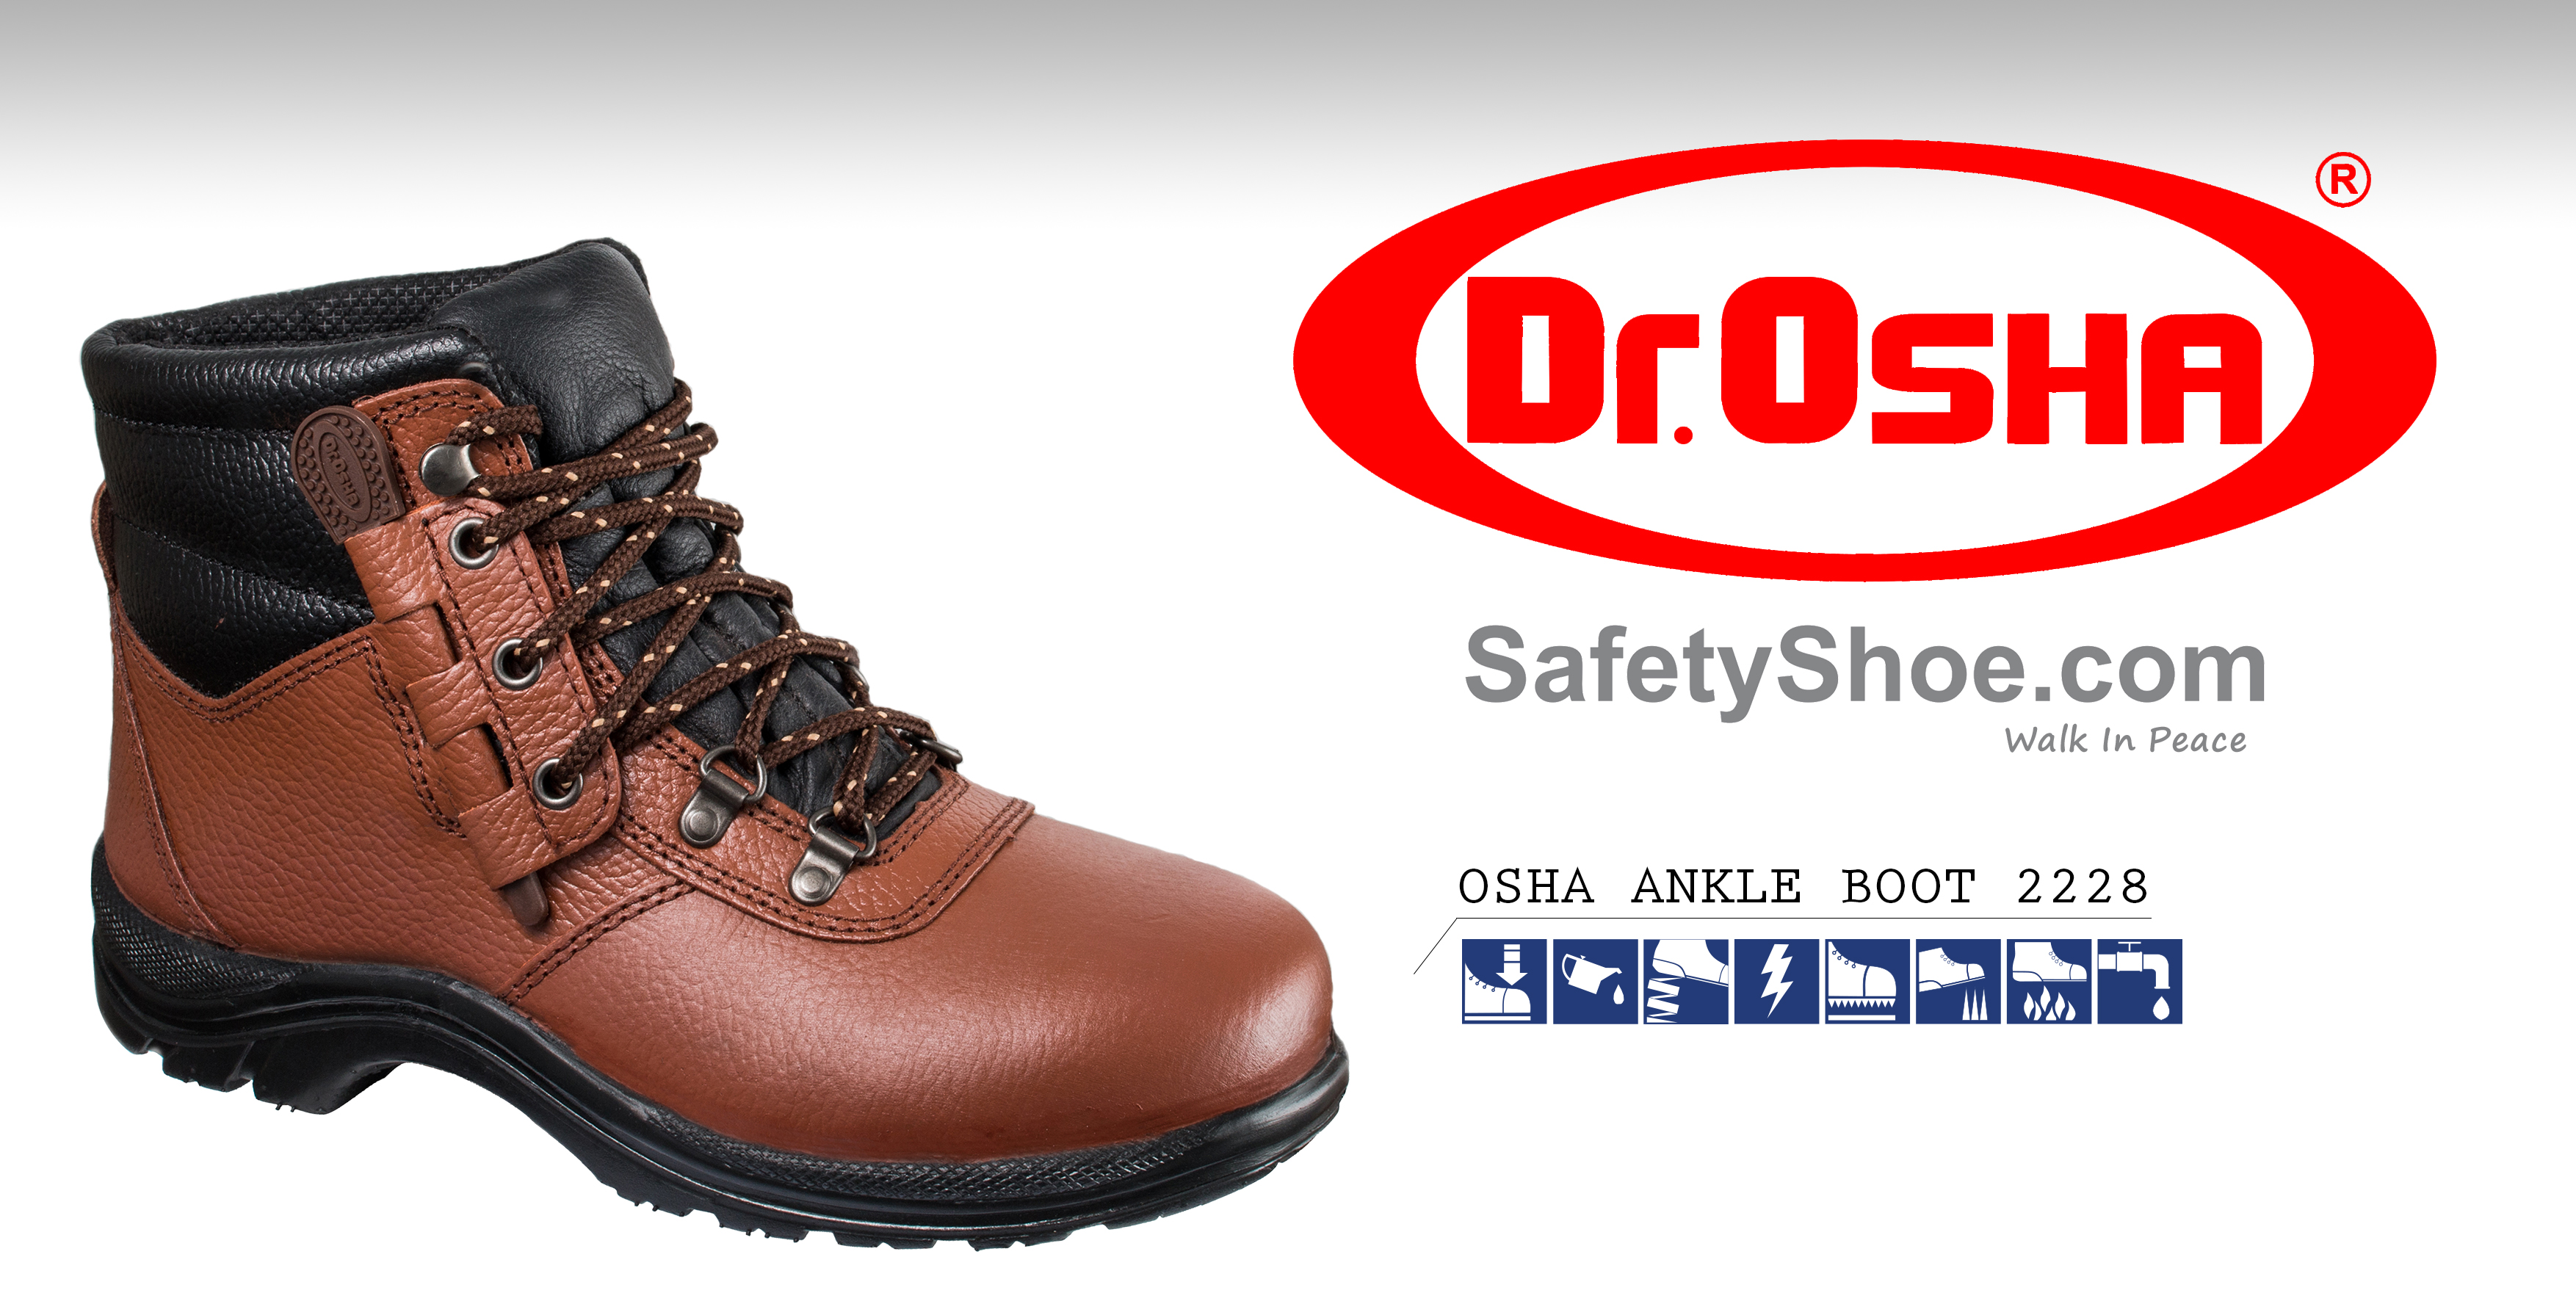 osha-ankle-boot-2228